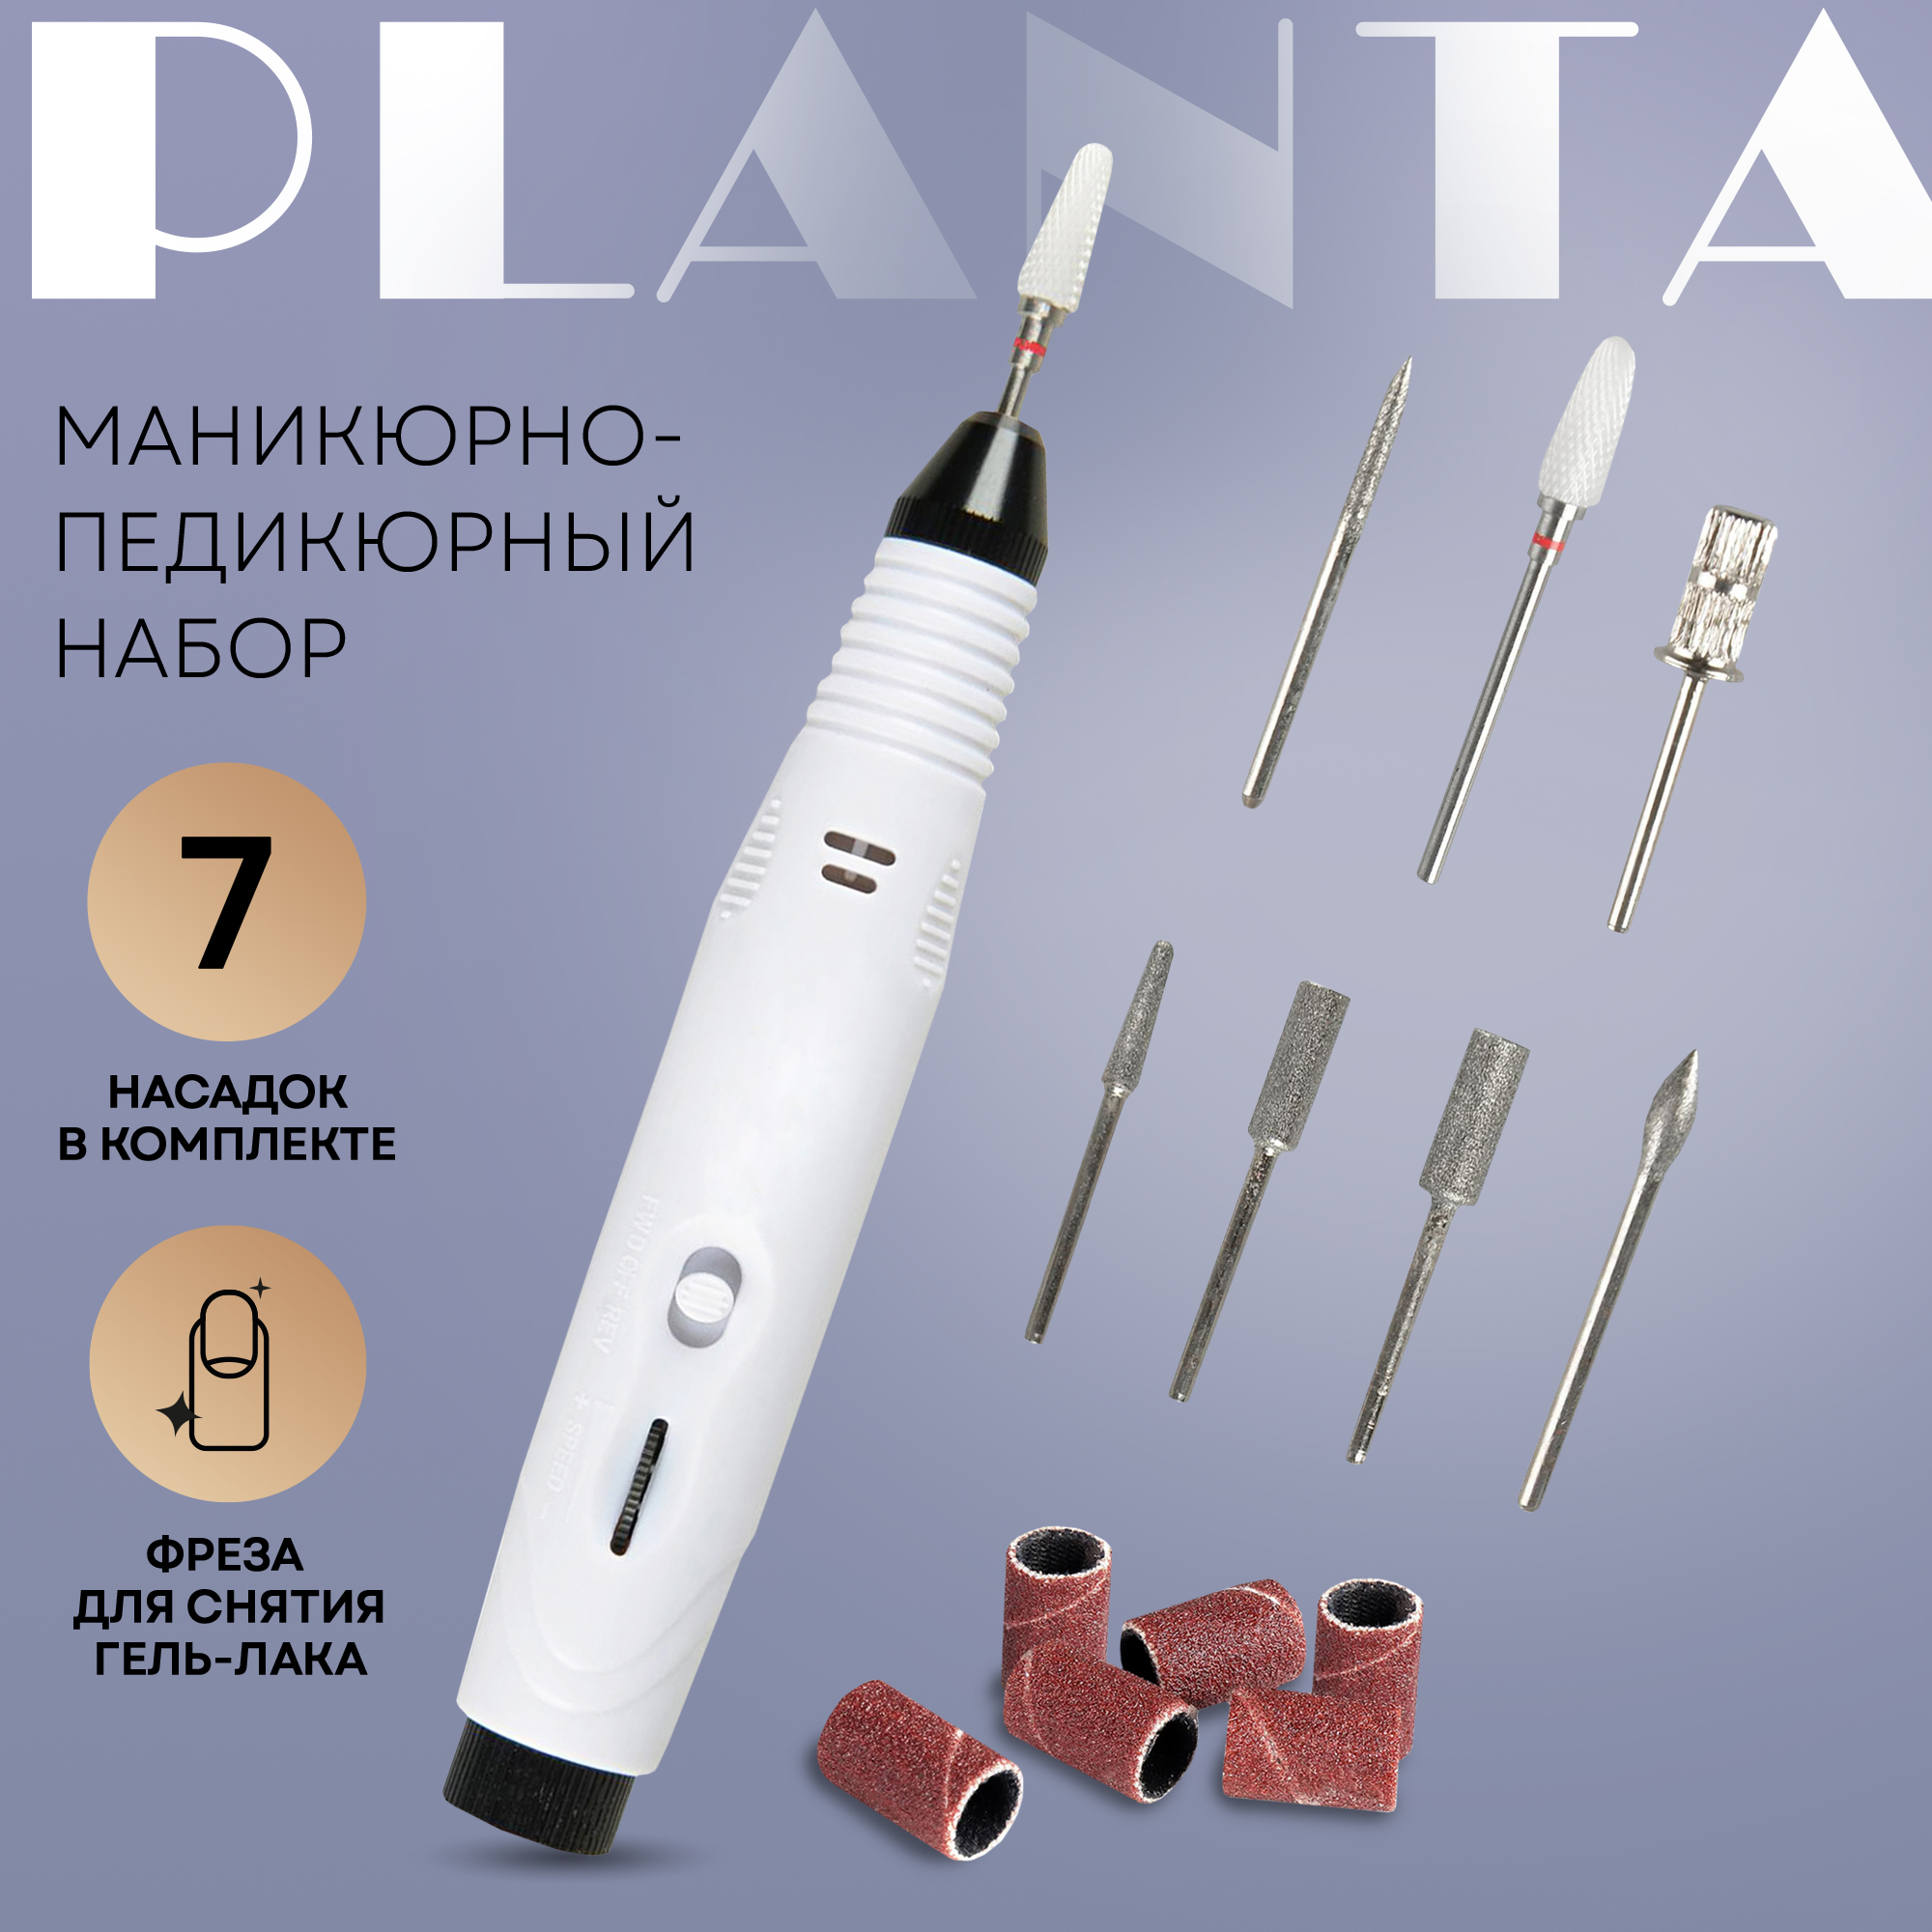 Маникюрный набор Planta PL-MAN15 Master Nail Care Black/White planta массажер для шеи и плеч msh 500b shiatsu master